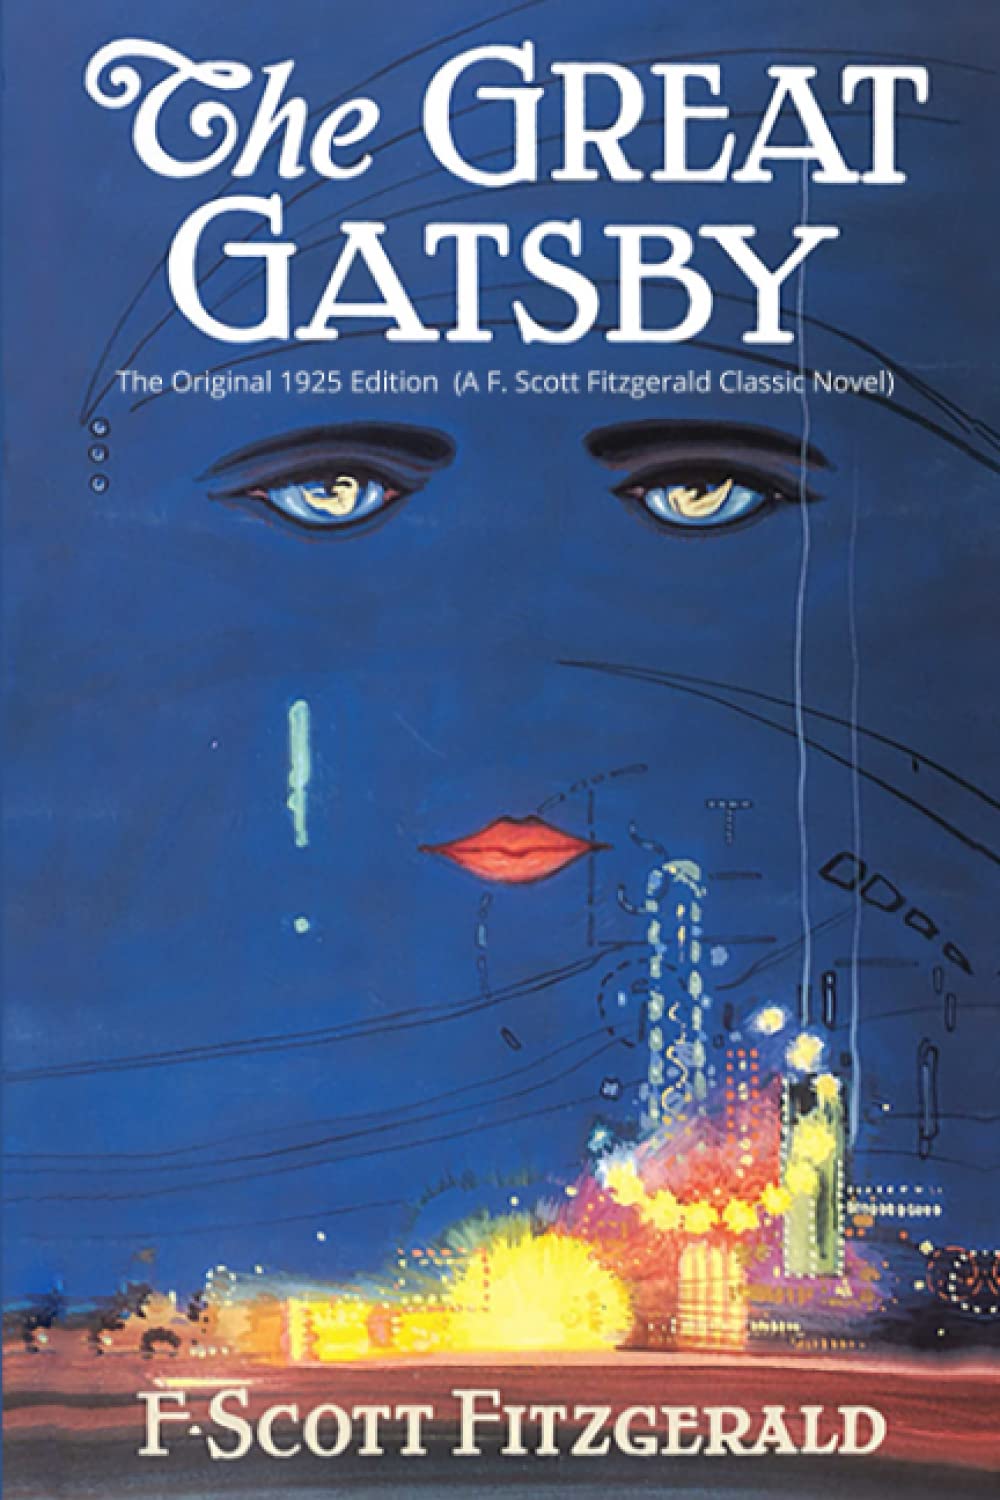 “The Great Gatsby” by F. Scott Fitzgerald